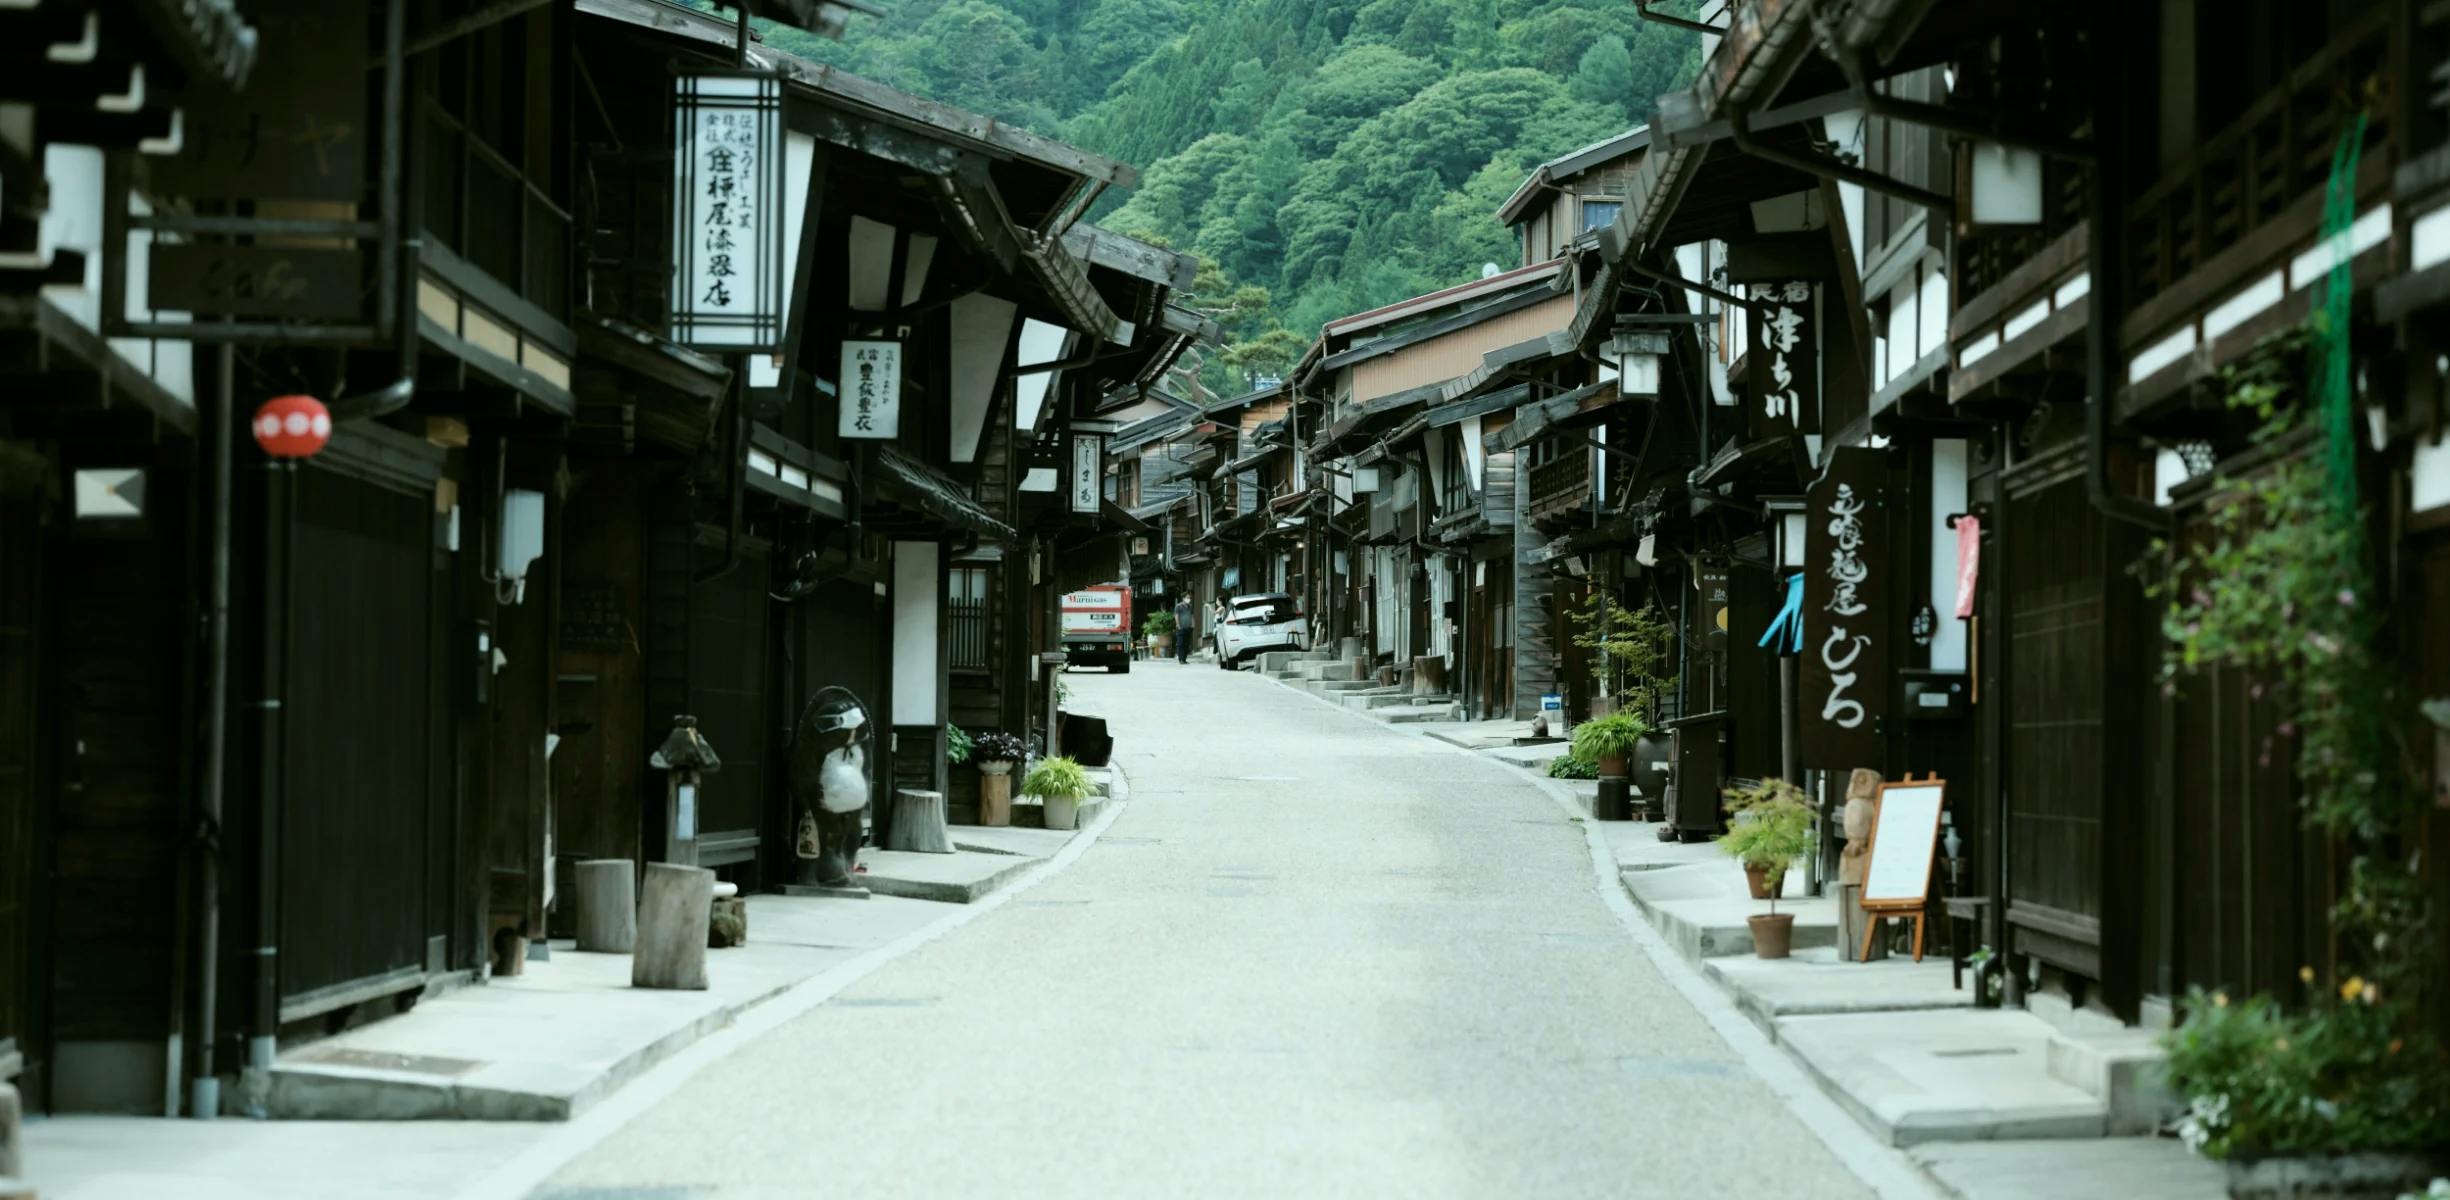 A picture of the main road in Narai-juku, Nagano Prefecture, Japan.